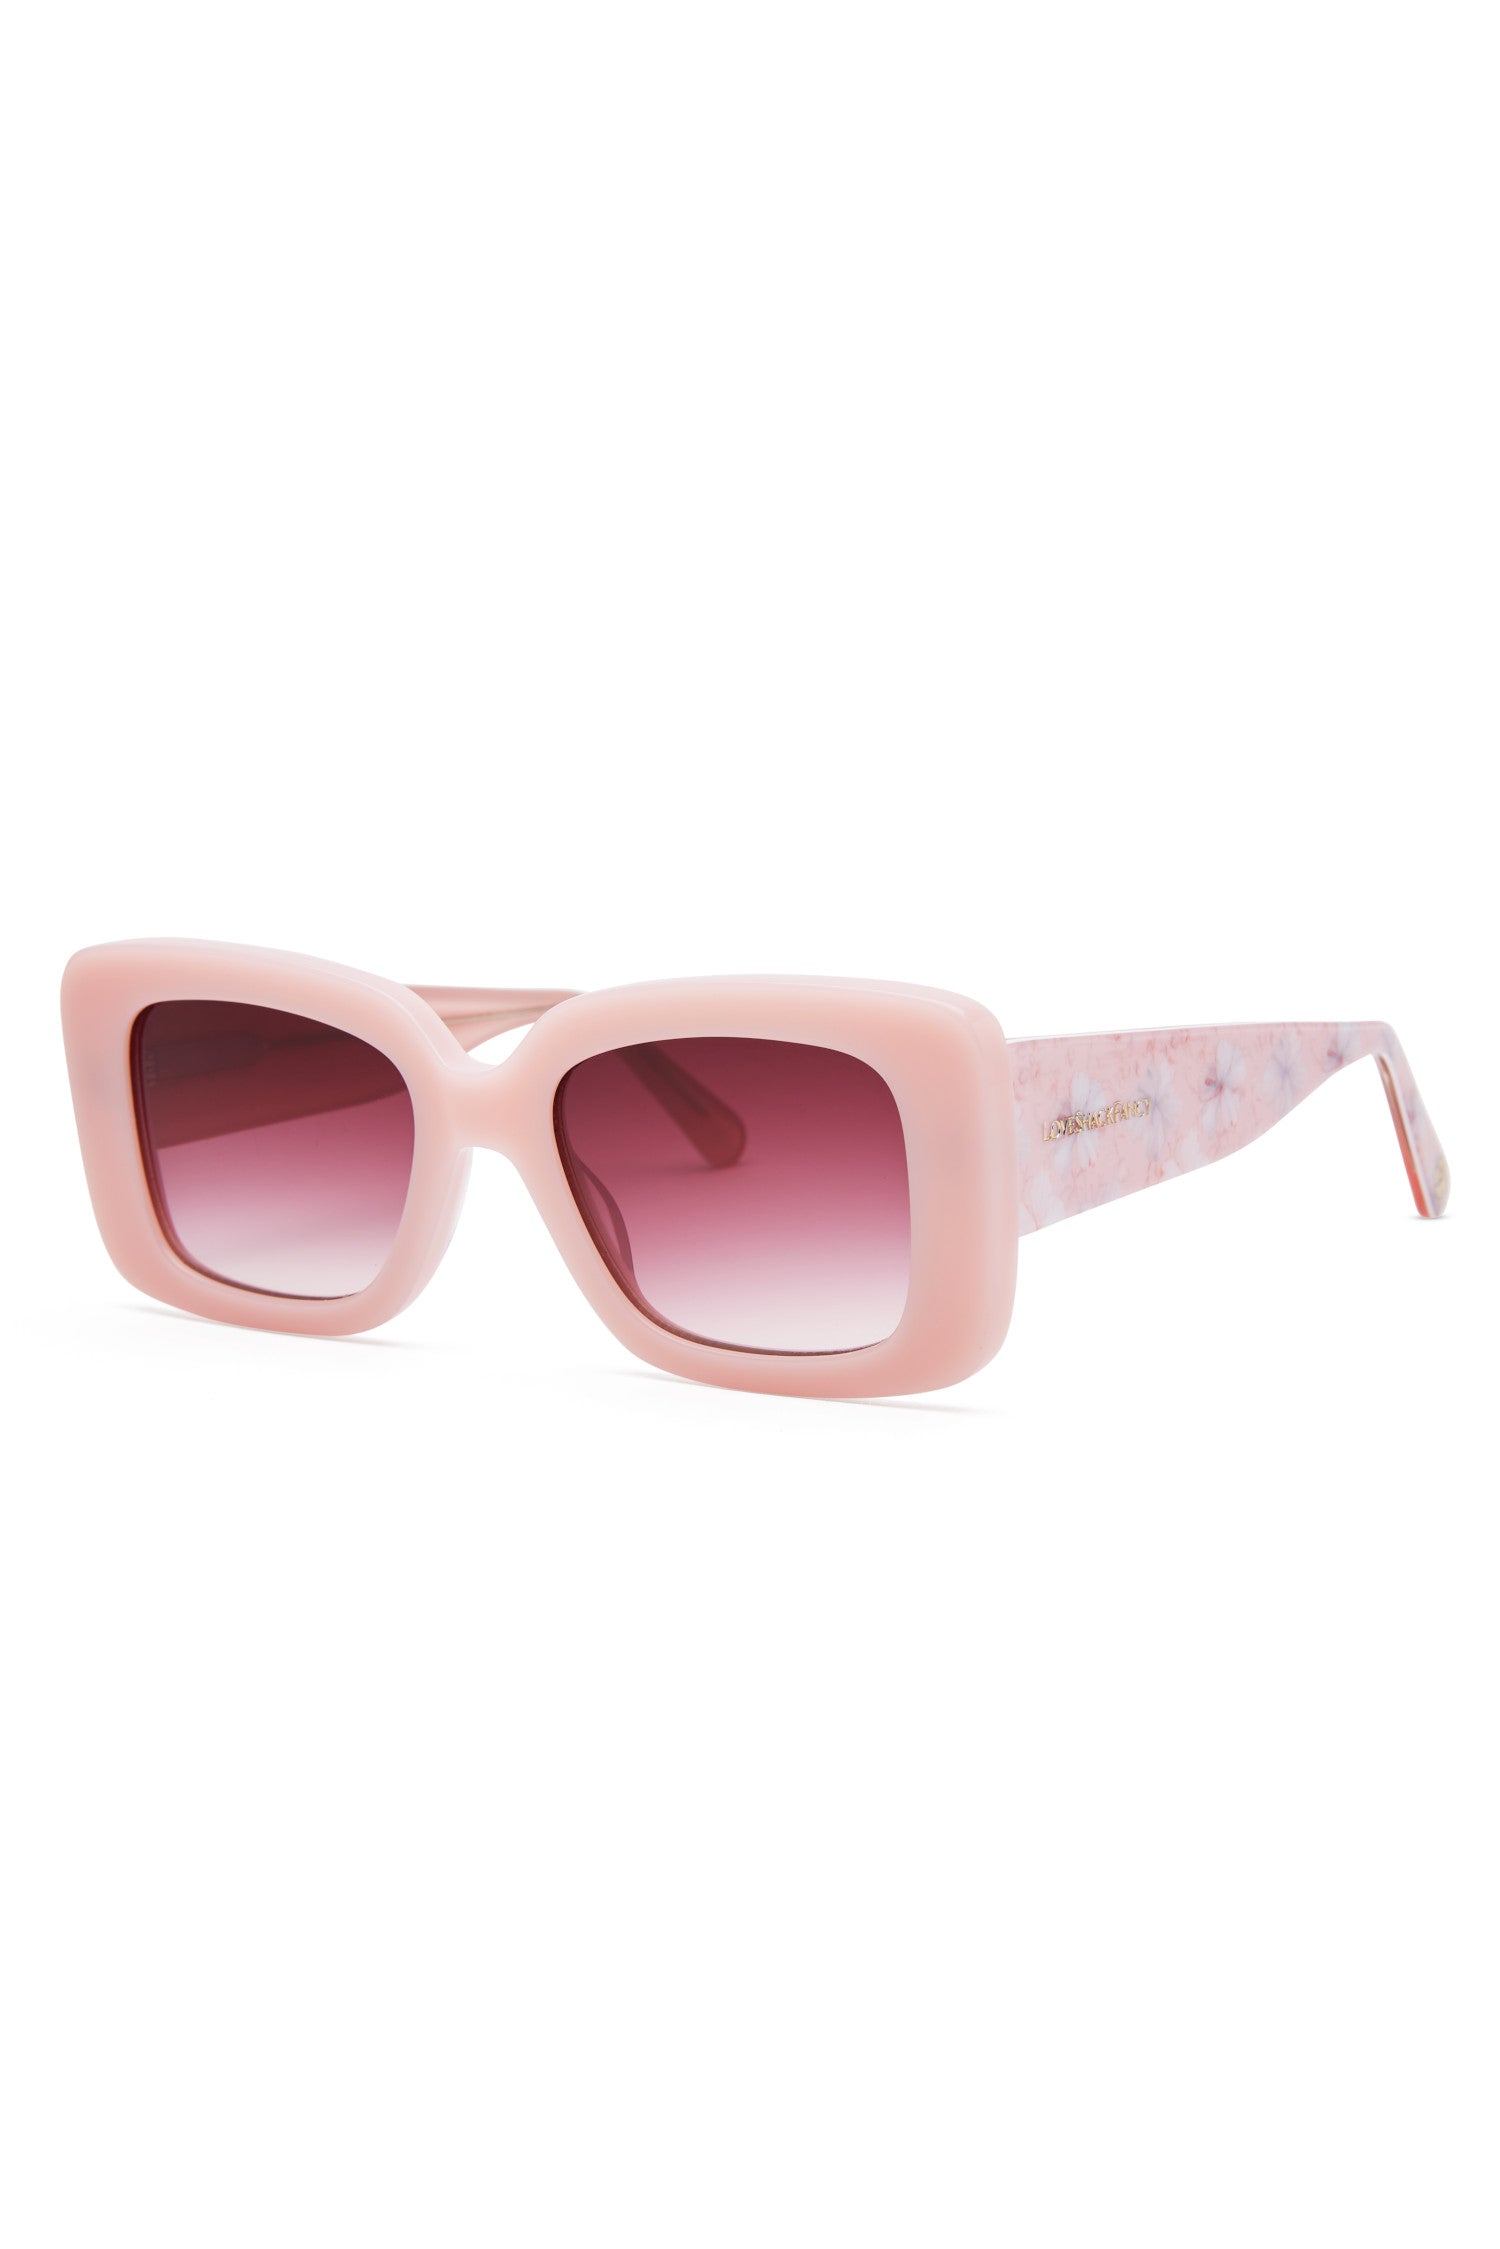 Womens square sunglasses blushing quartz